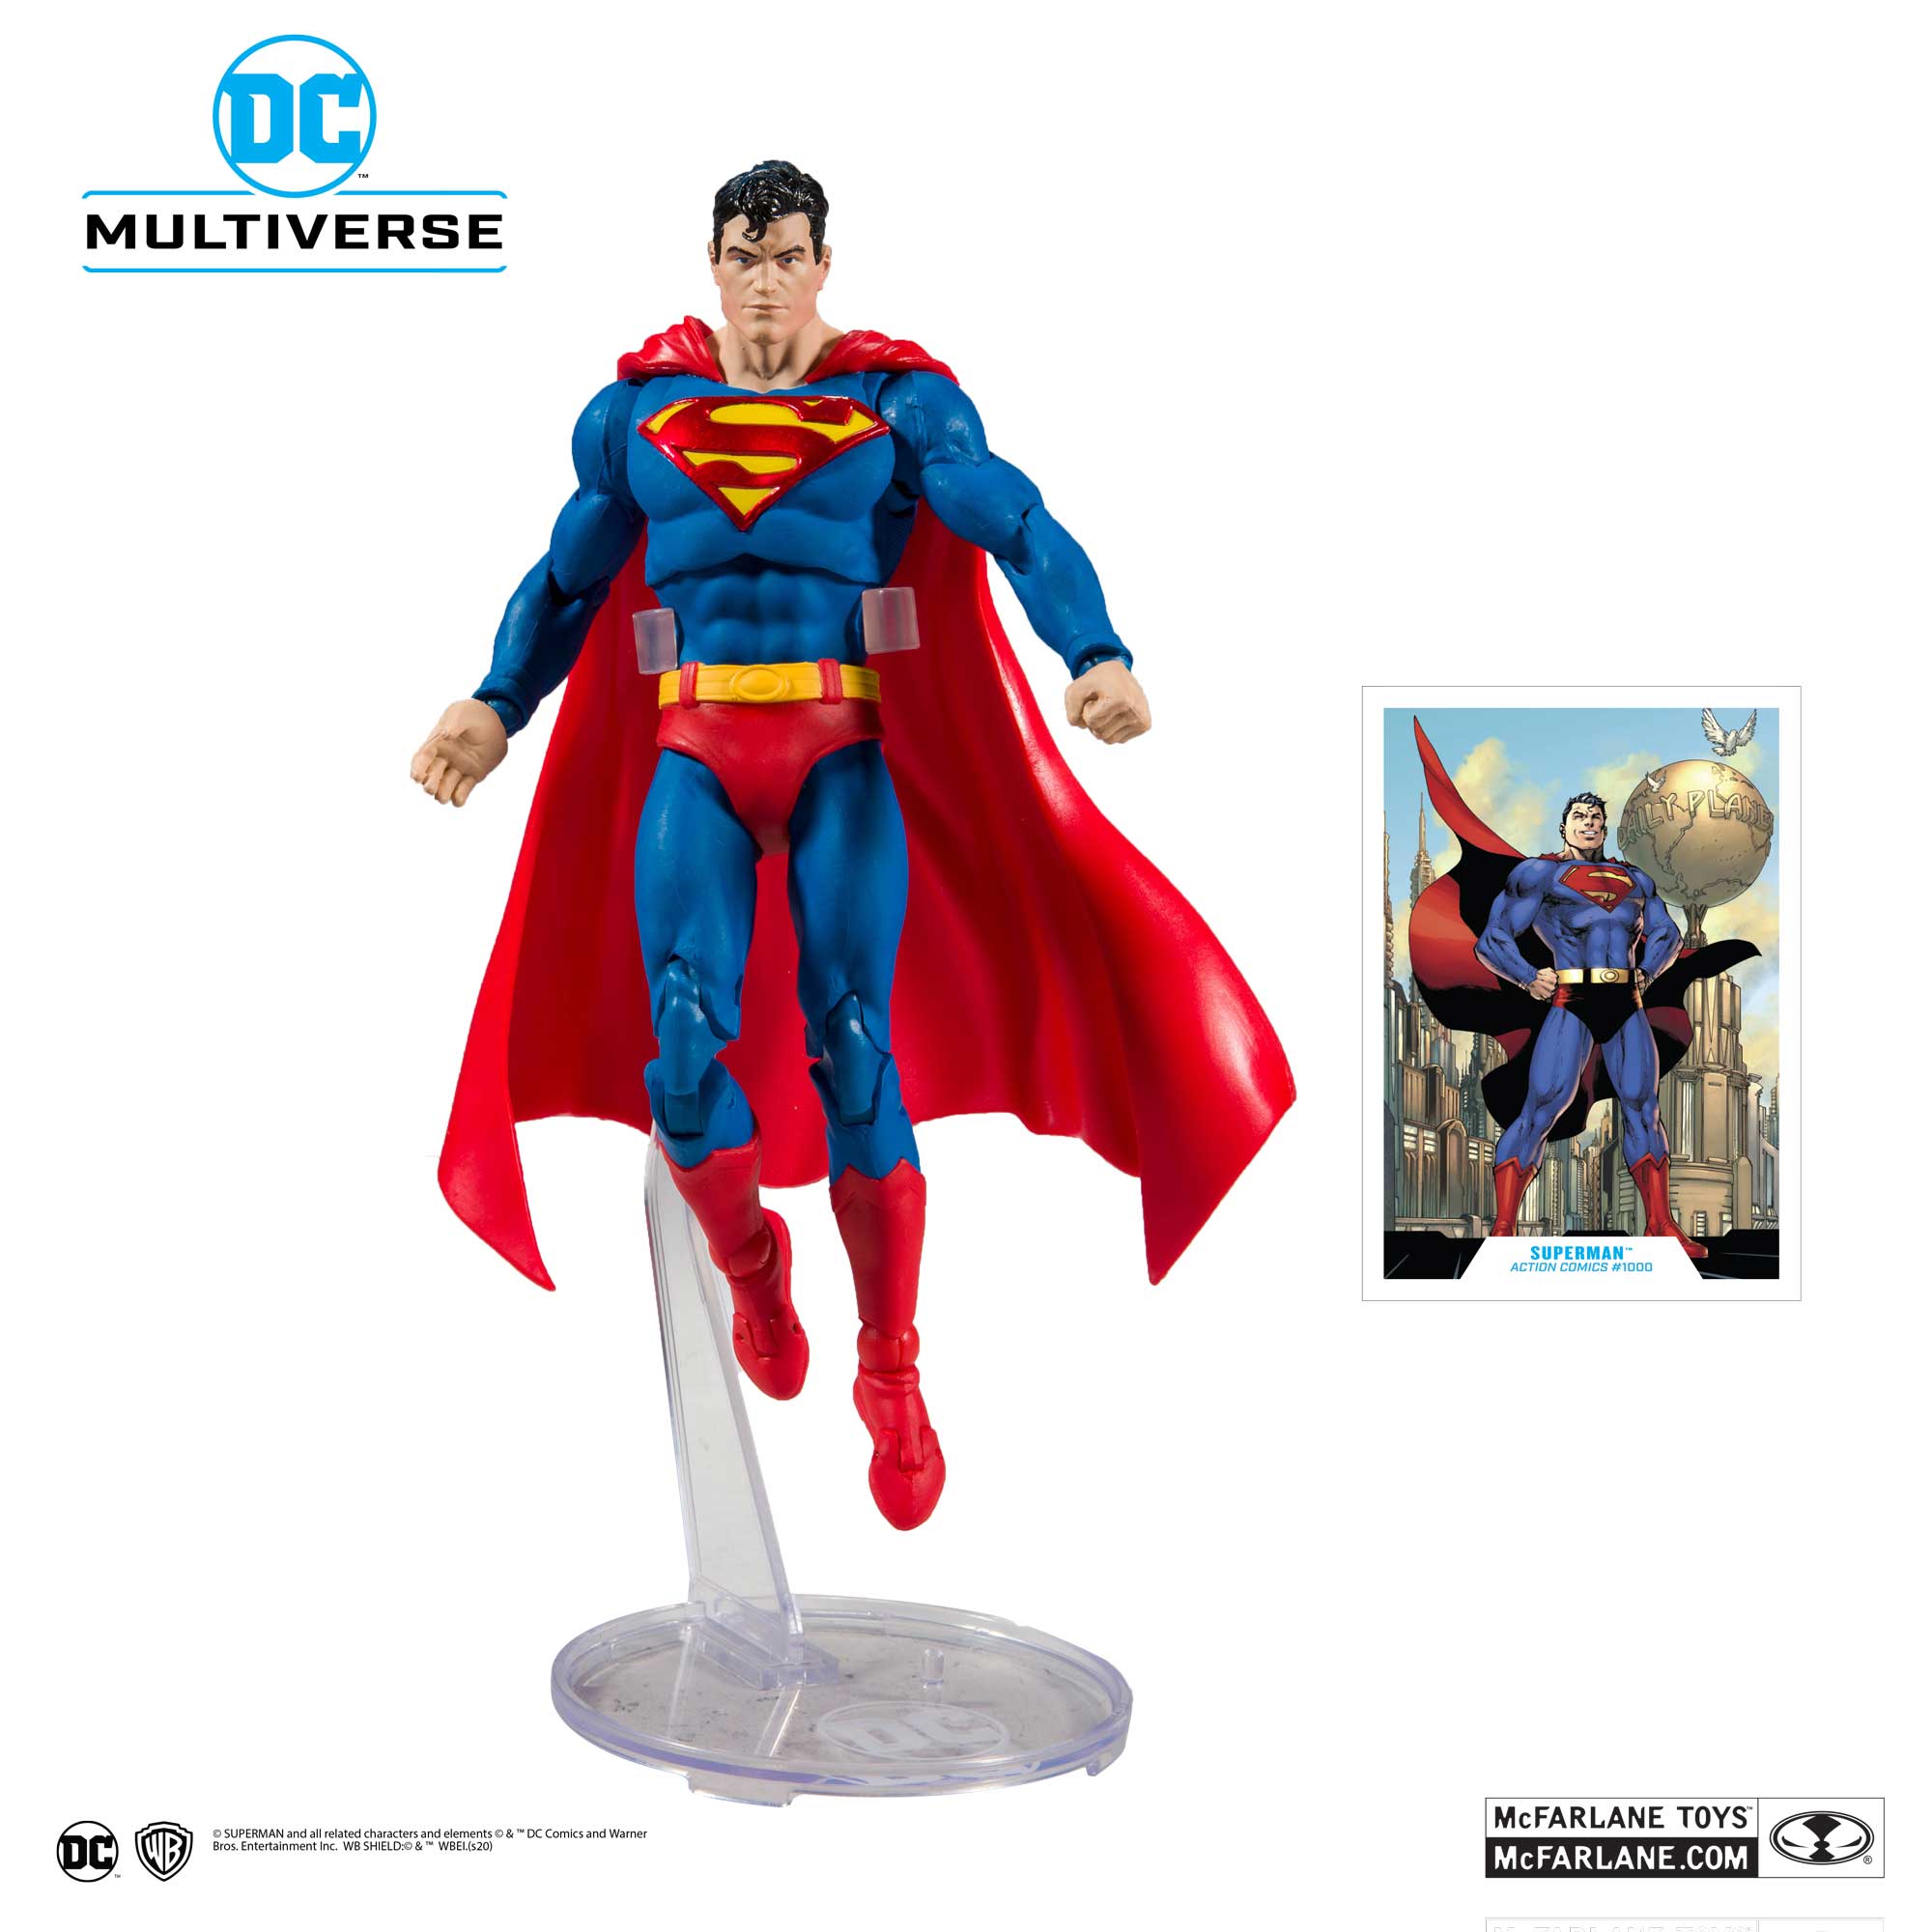 McFarlane Toys' Limited Edition Superman Action Comics #1 Resin